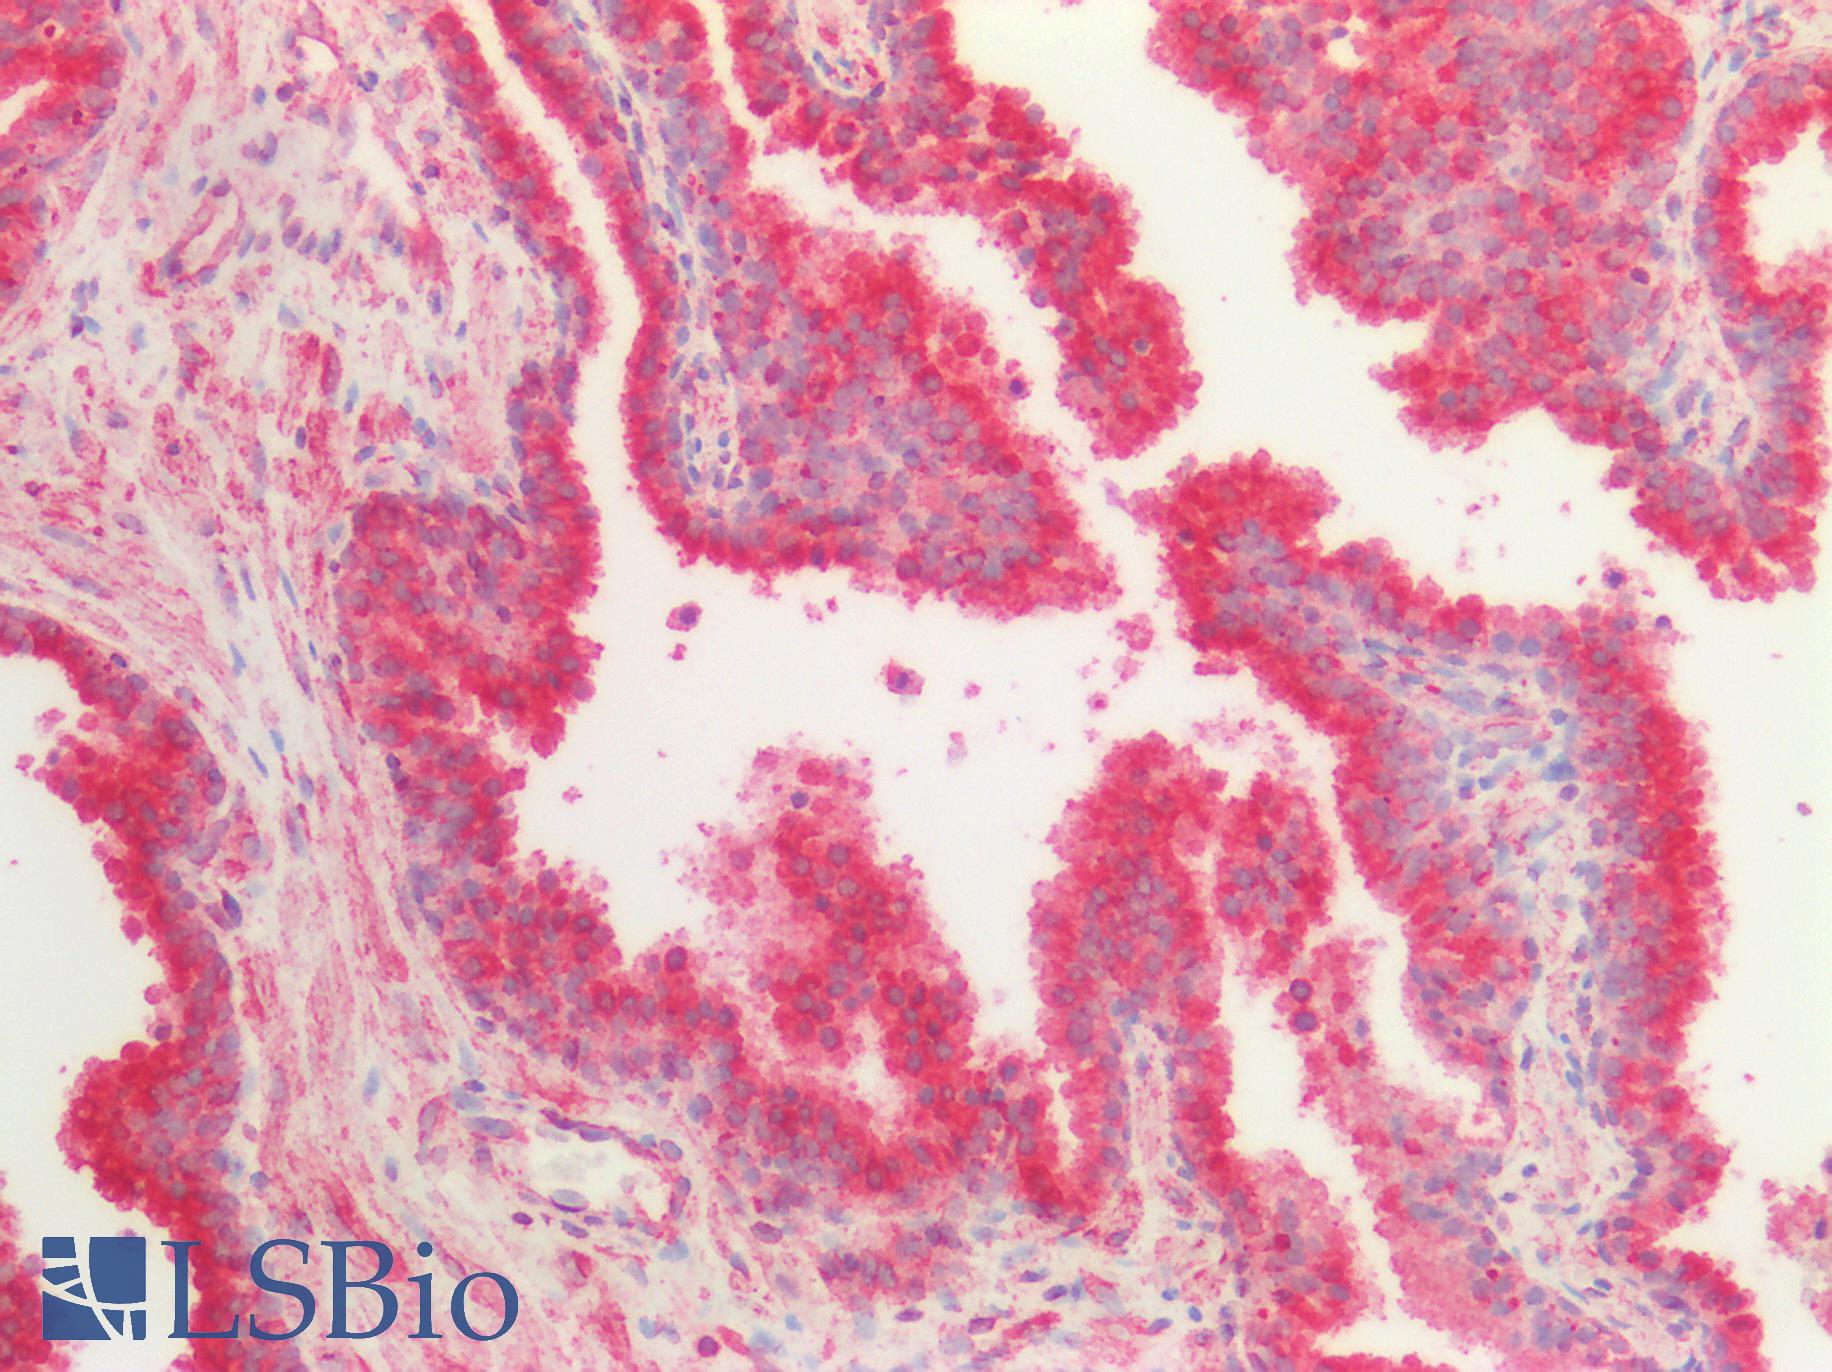 TUBB / Beta Tubulin Antibody - Human Prostate: Formalin-Fixed, Paraffin-Embedded (FFPE)